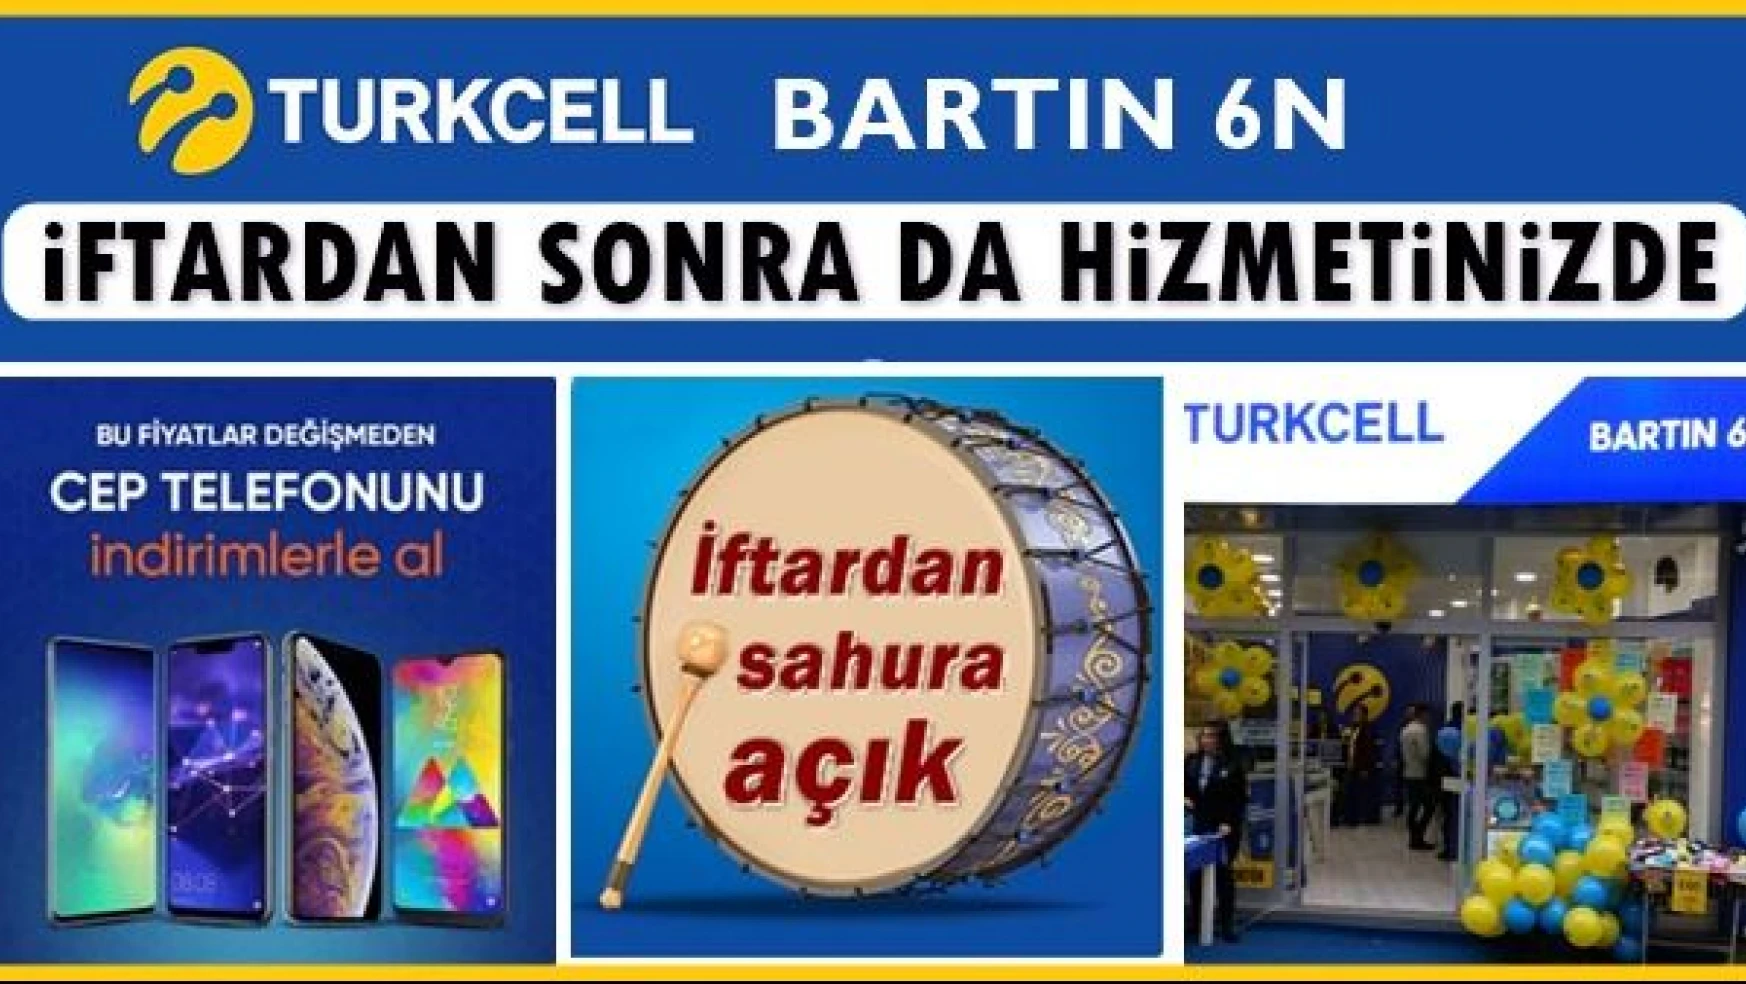 Turkcell Bartın 6N, iftardan sonra da açık